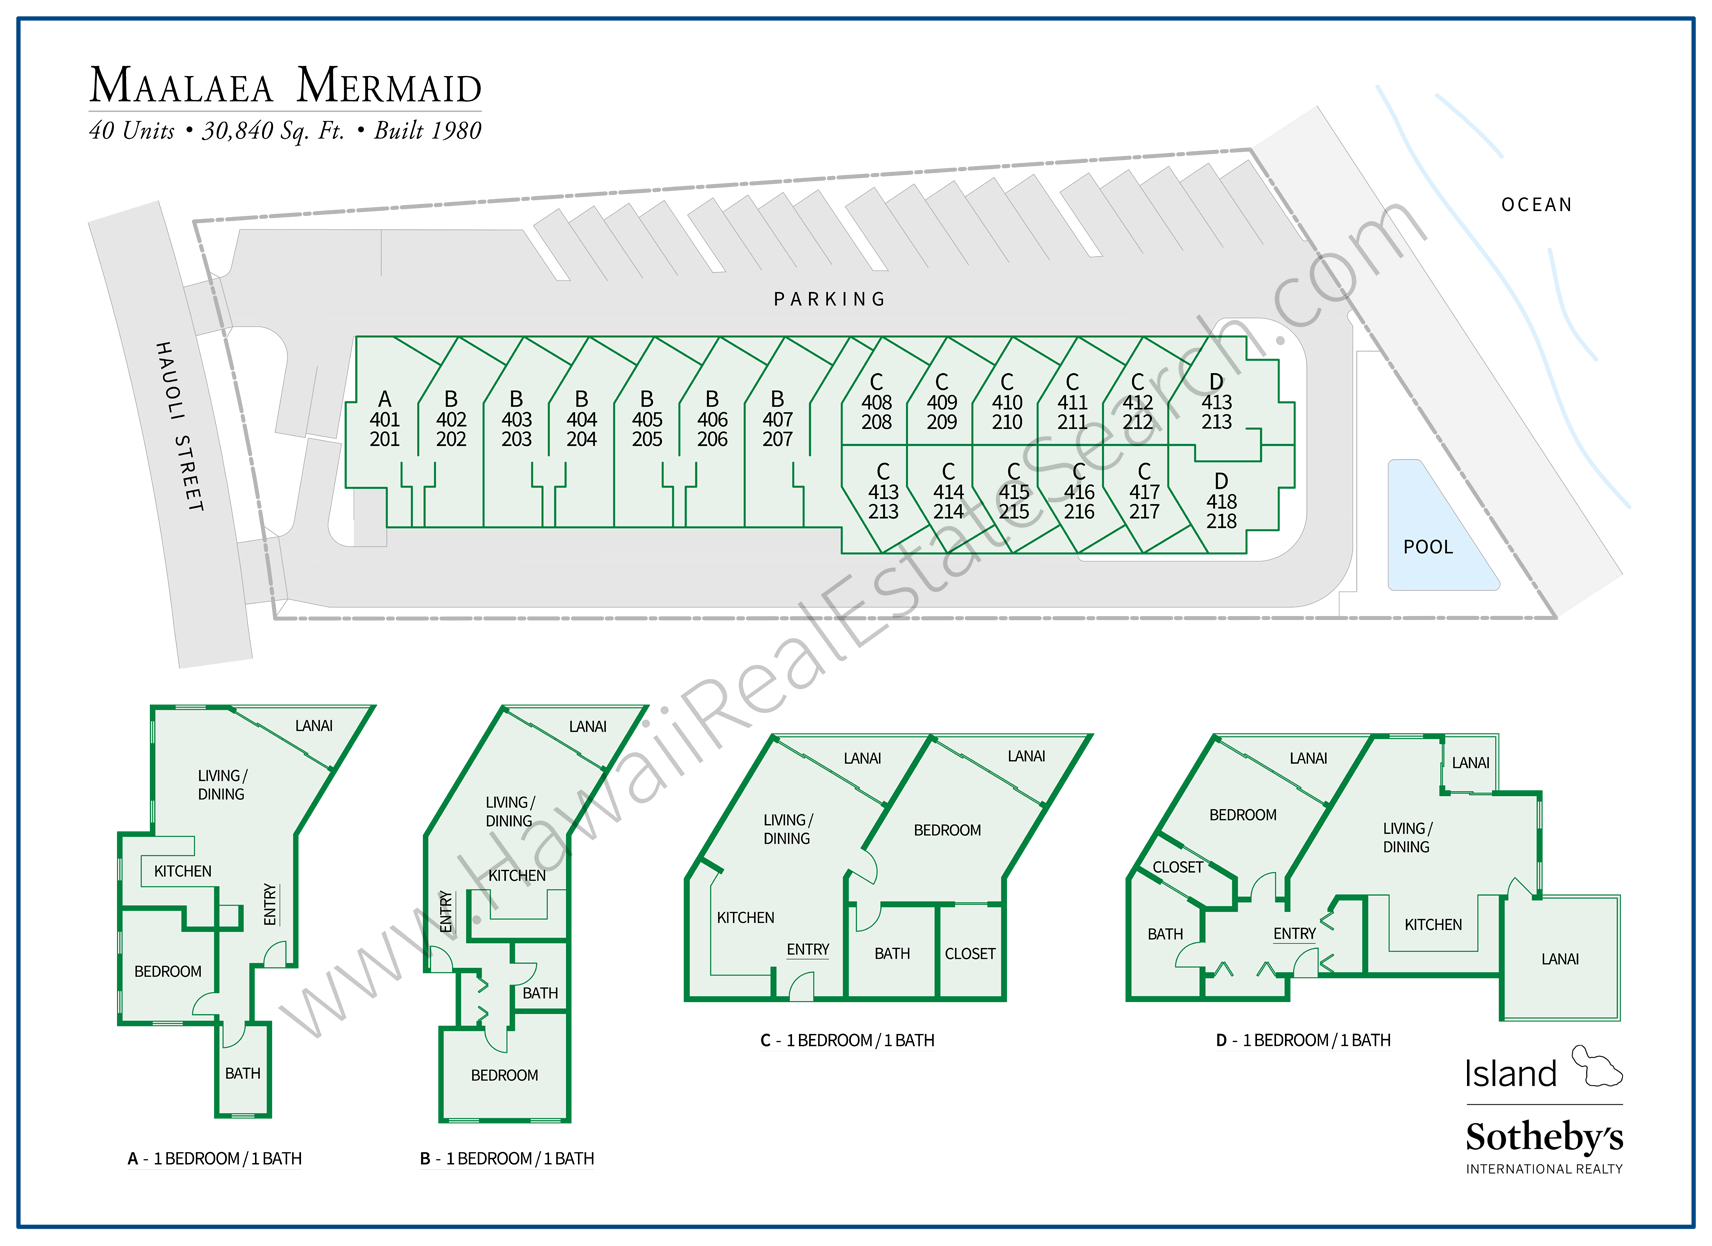 maalaea mermaid map and floor plans